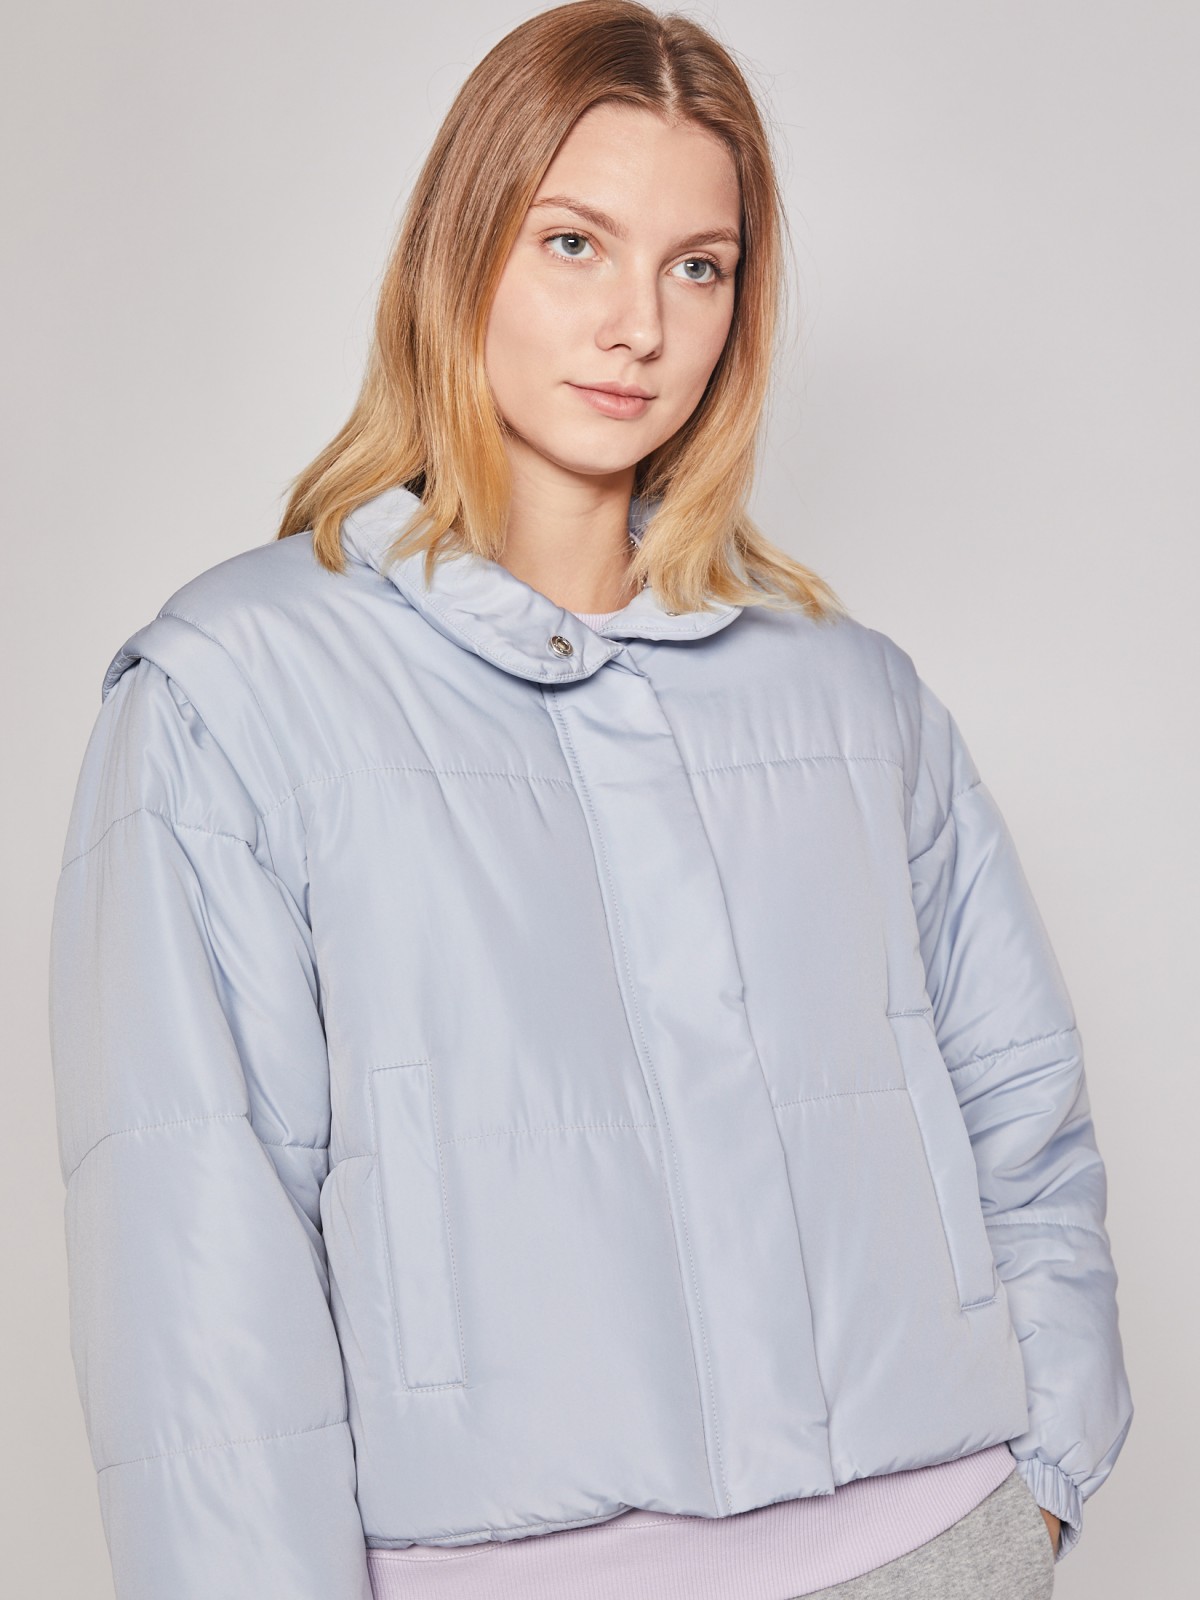 Короткая дутая куртка Oversize zolla 022125150254, цвет светло-голубой, размер XS - фото 2